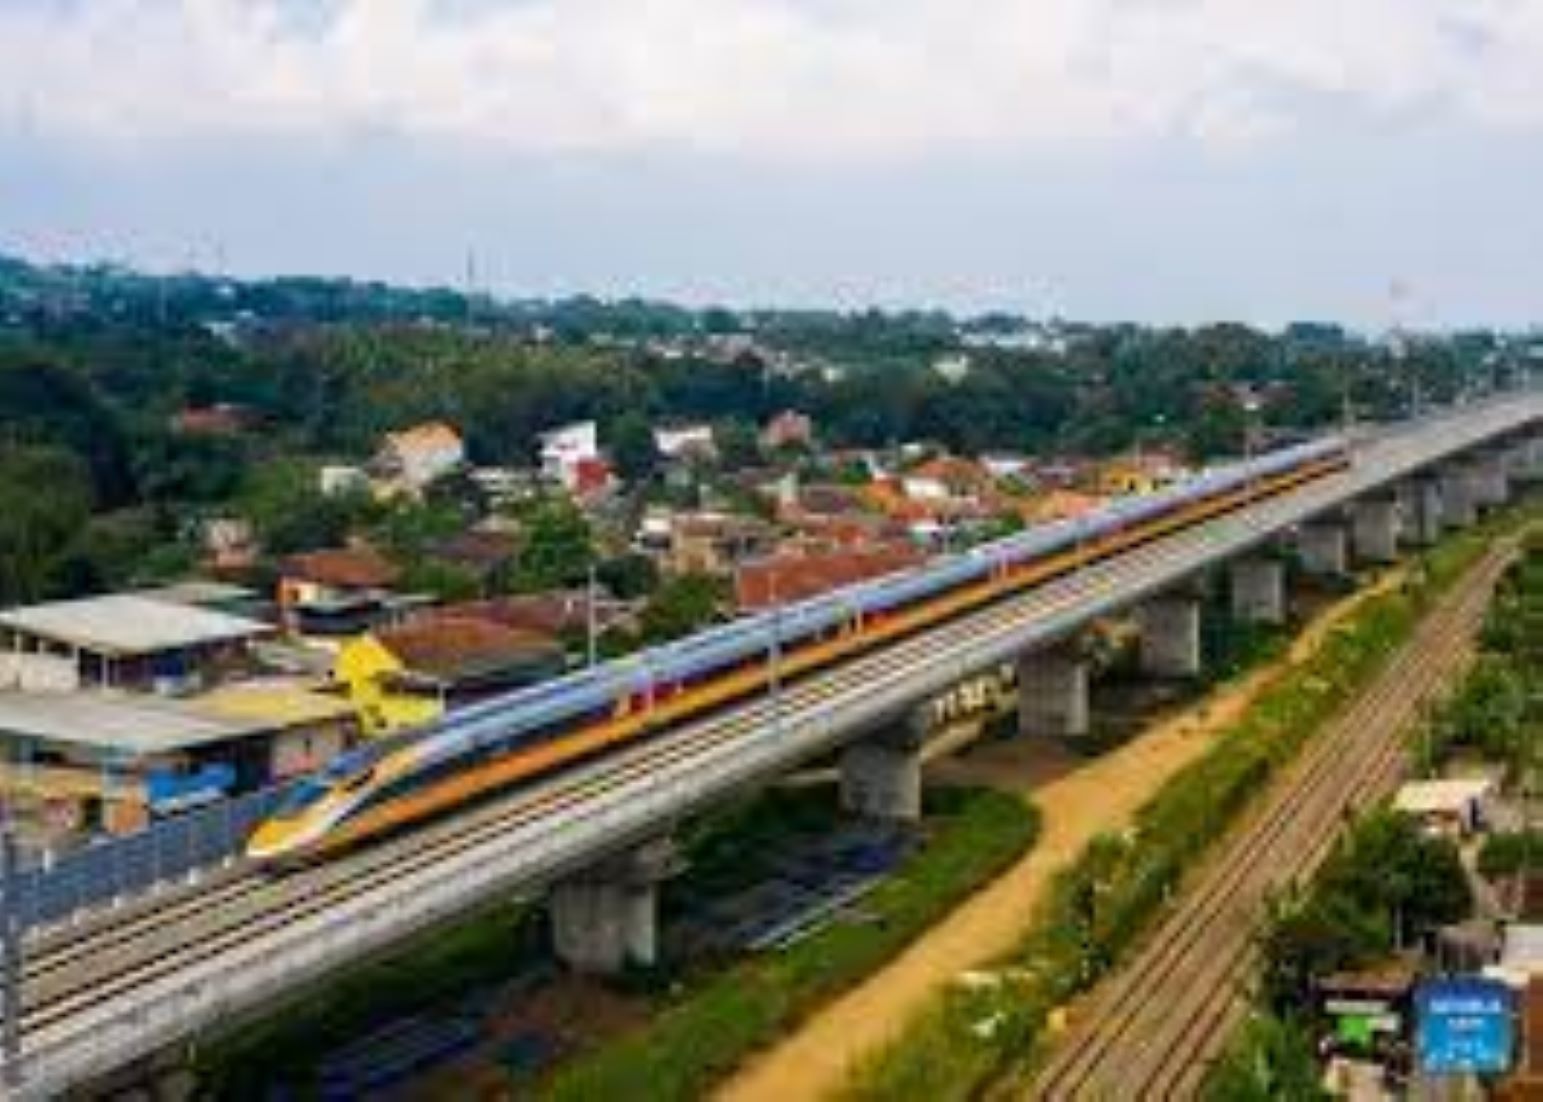 Joint Commissioning, Testing Of Jakarta-Bandung High-Speed Railway Starts